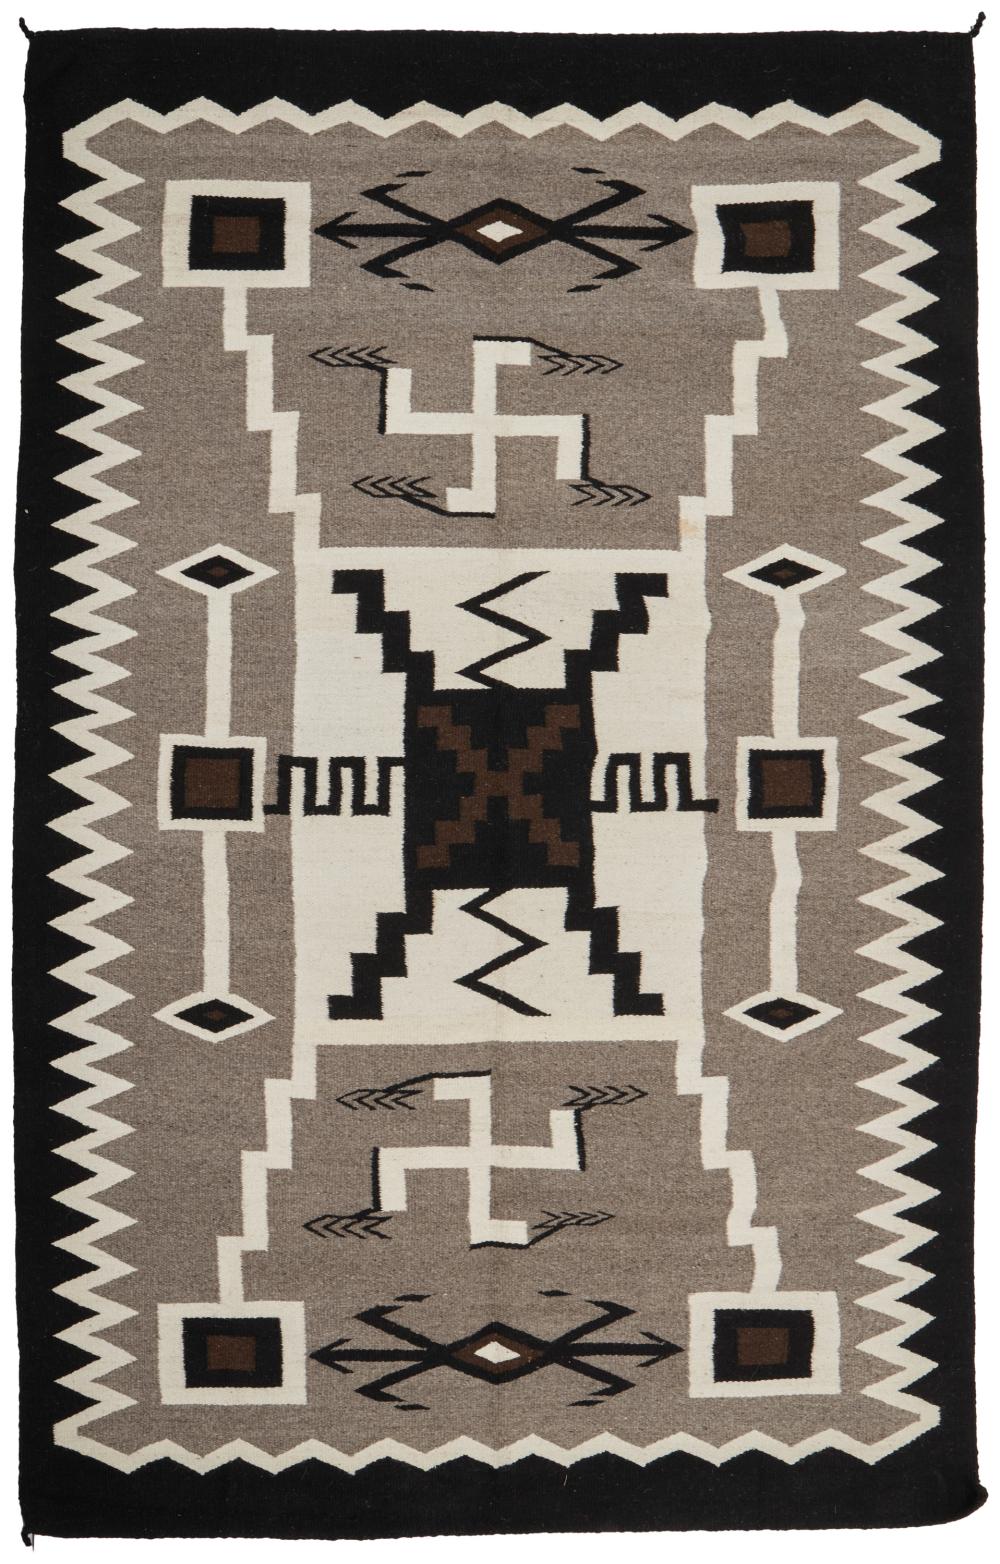 A NAVAJO STYLE REGIONAL RUGA Navajo style 344717